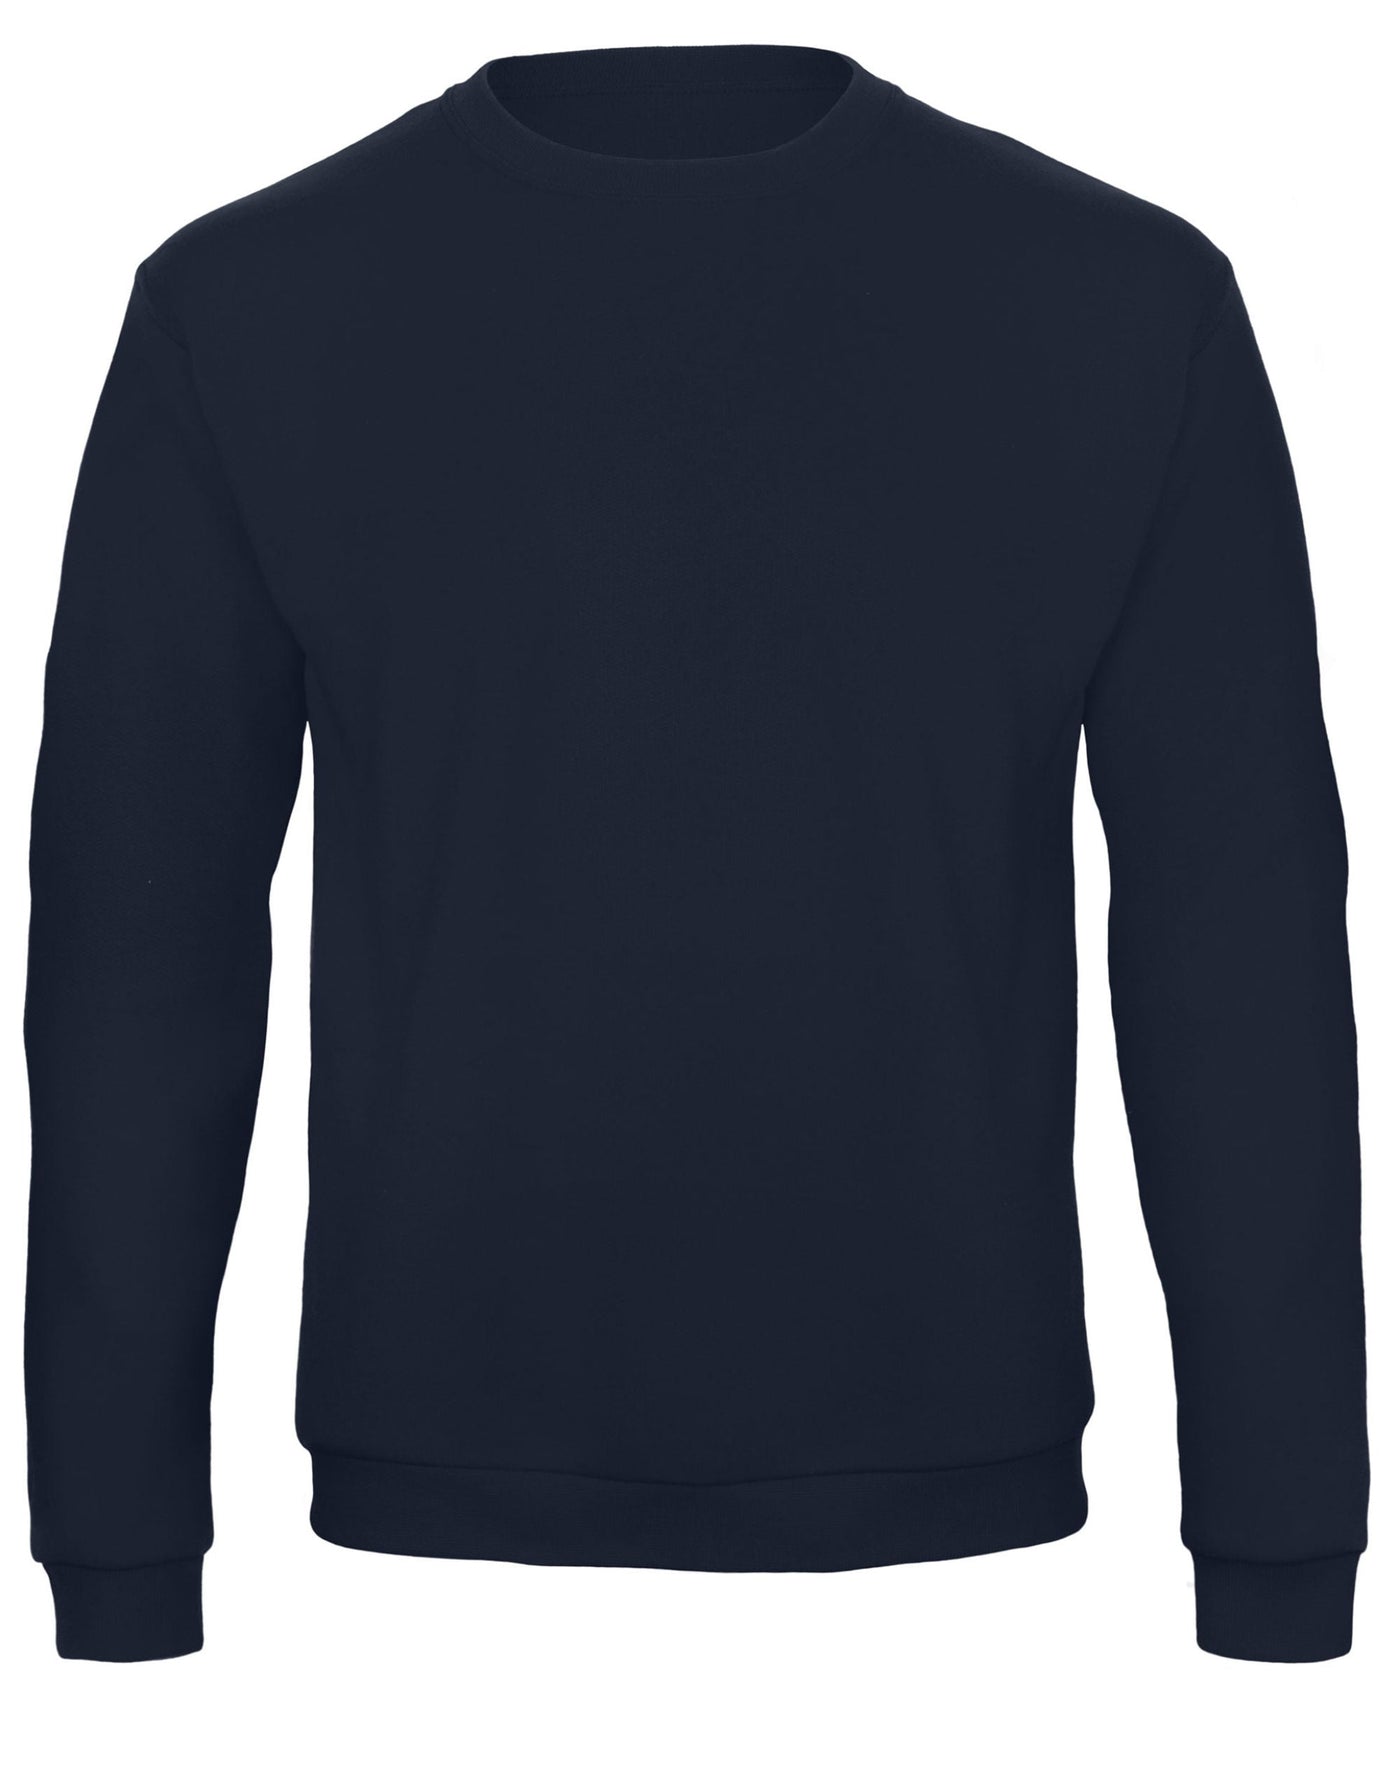 Navy Standard Fit Sweatshirt